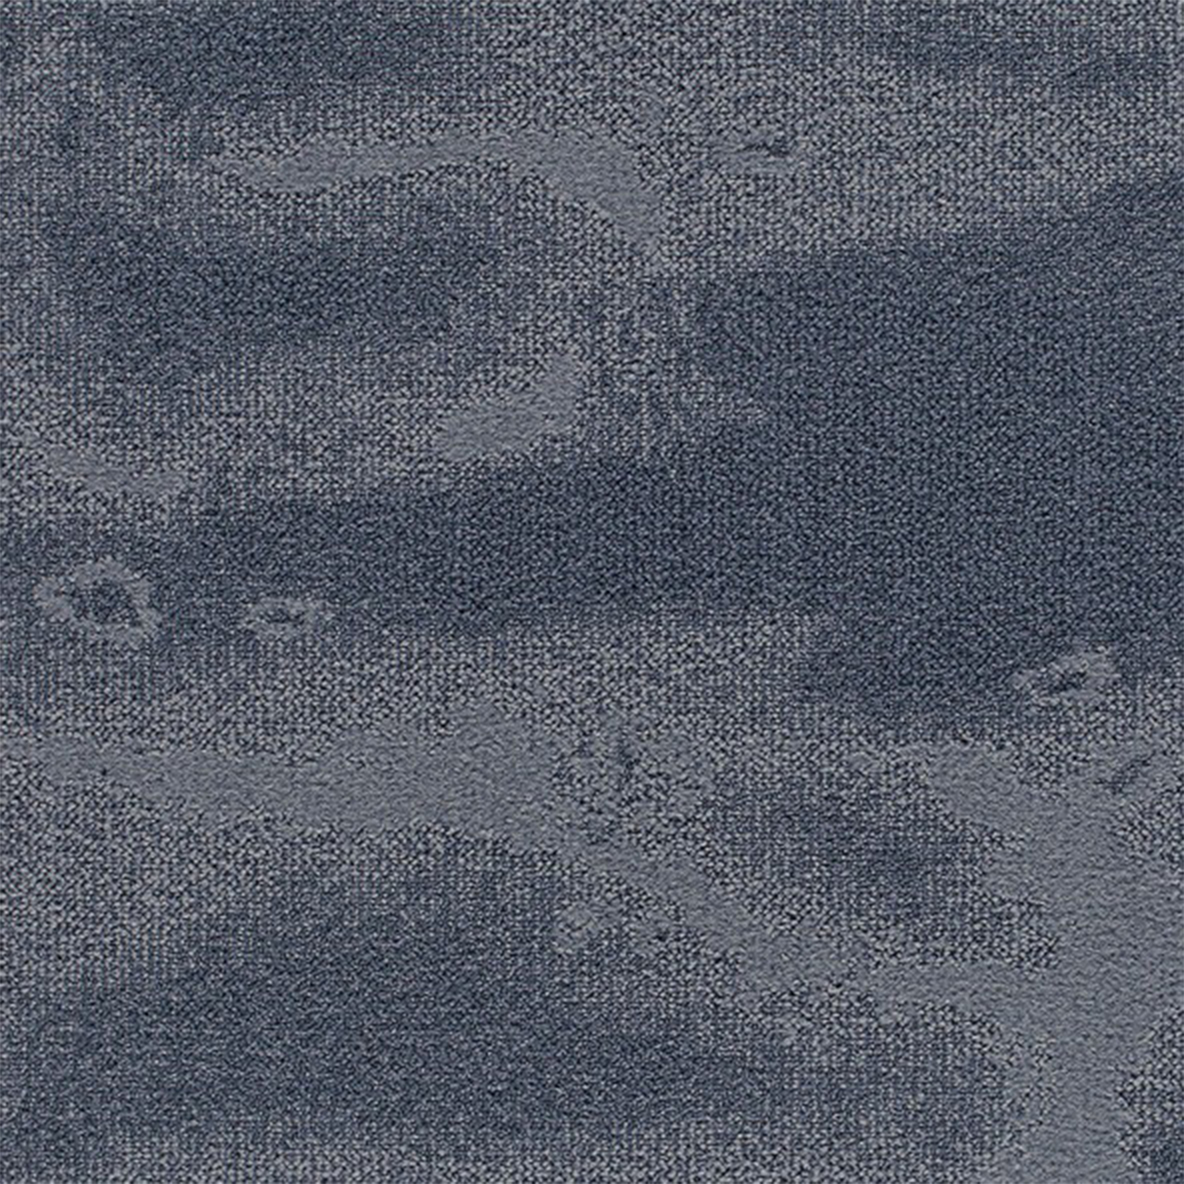 Oil and Water Commercial Carpet Tiles .32 Inch x 50x50 cm per Tile Blueprint color close up